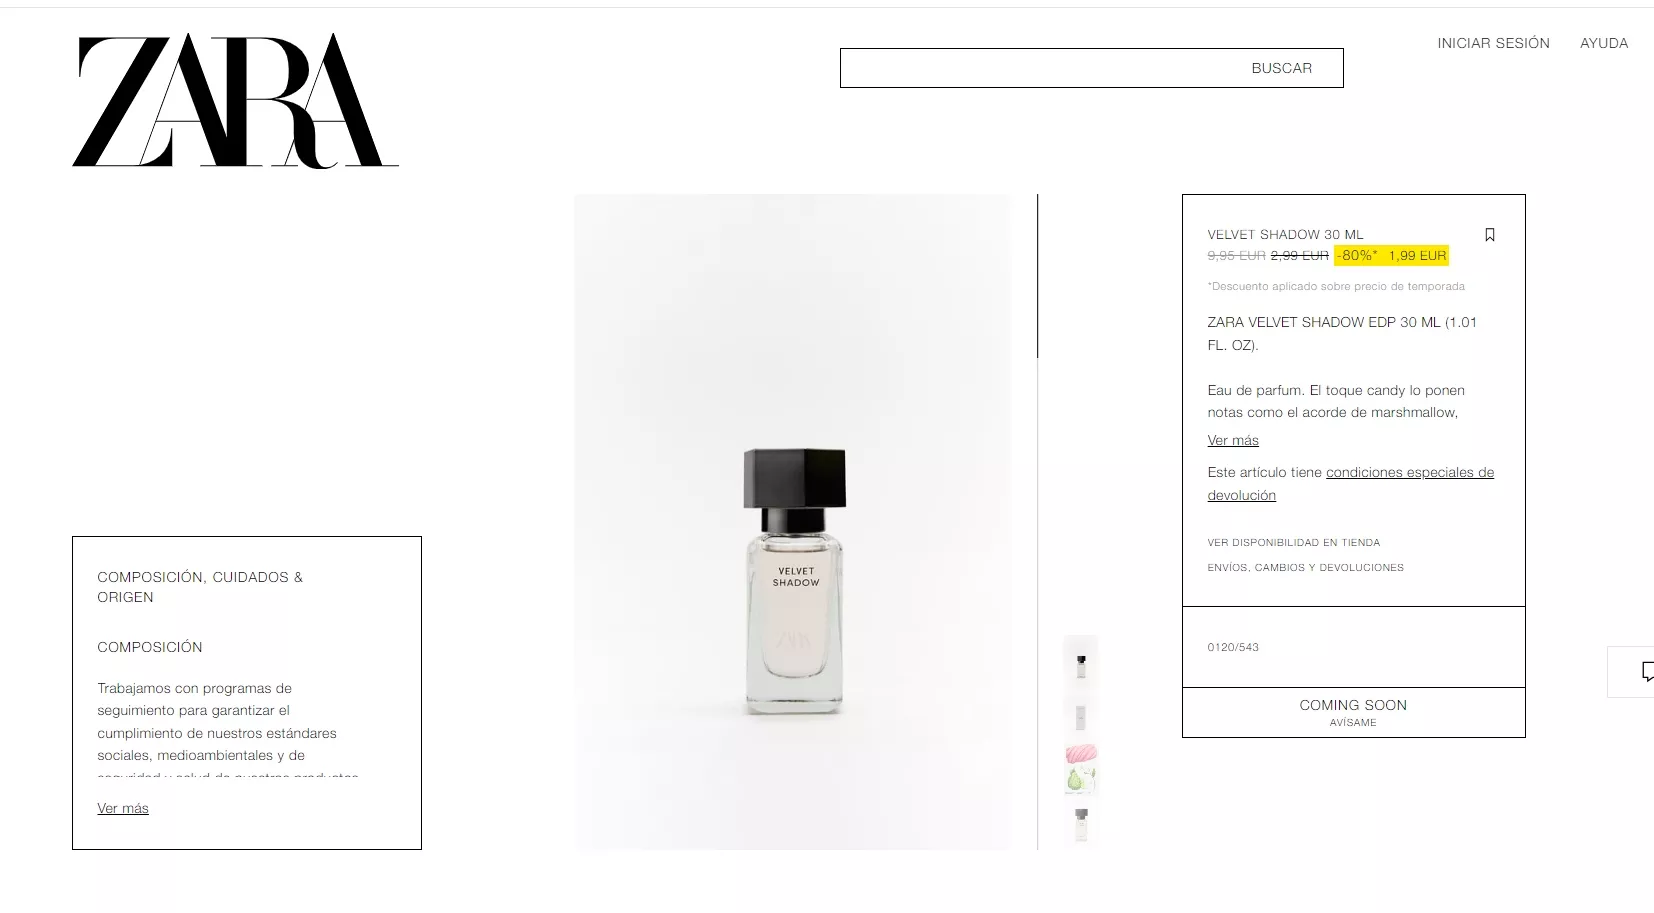 Perfume Velvet Shadow de Zara / ZARA